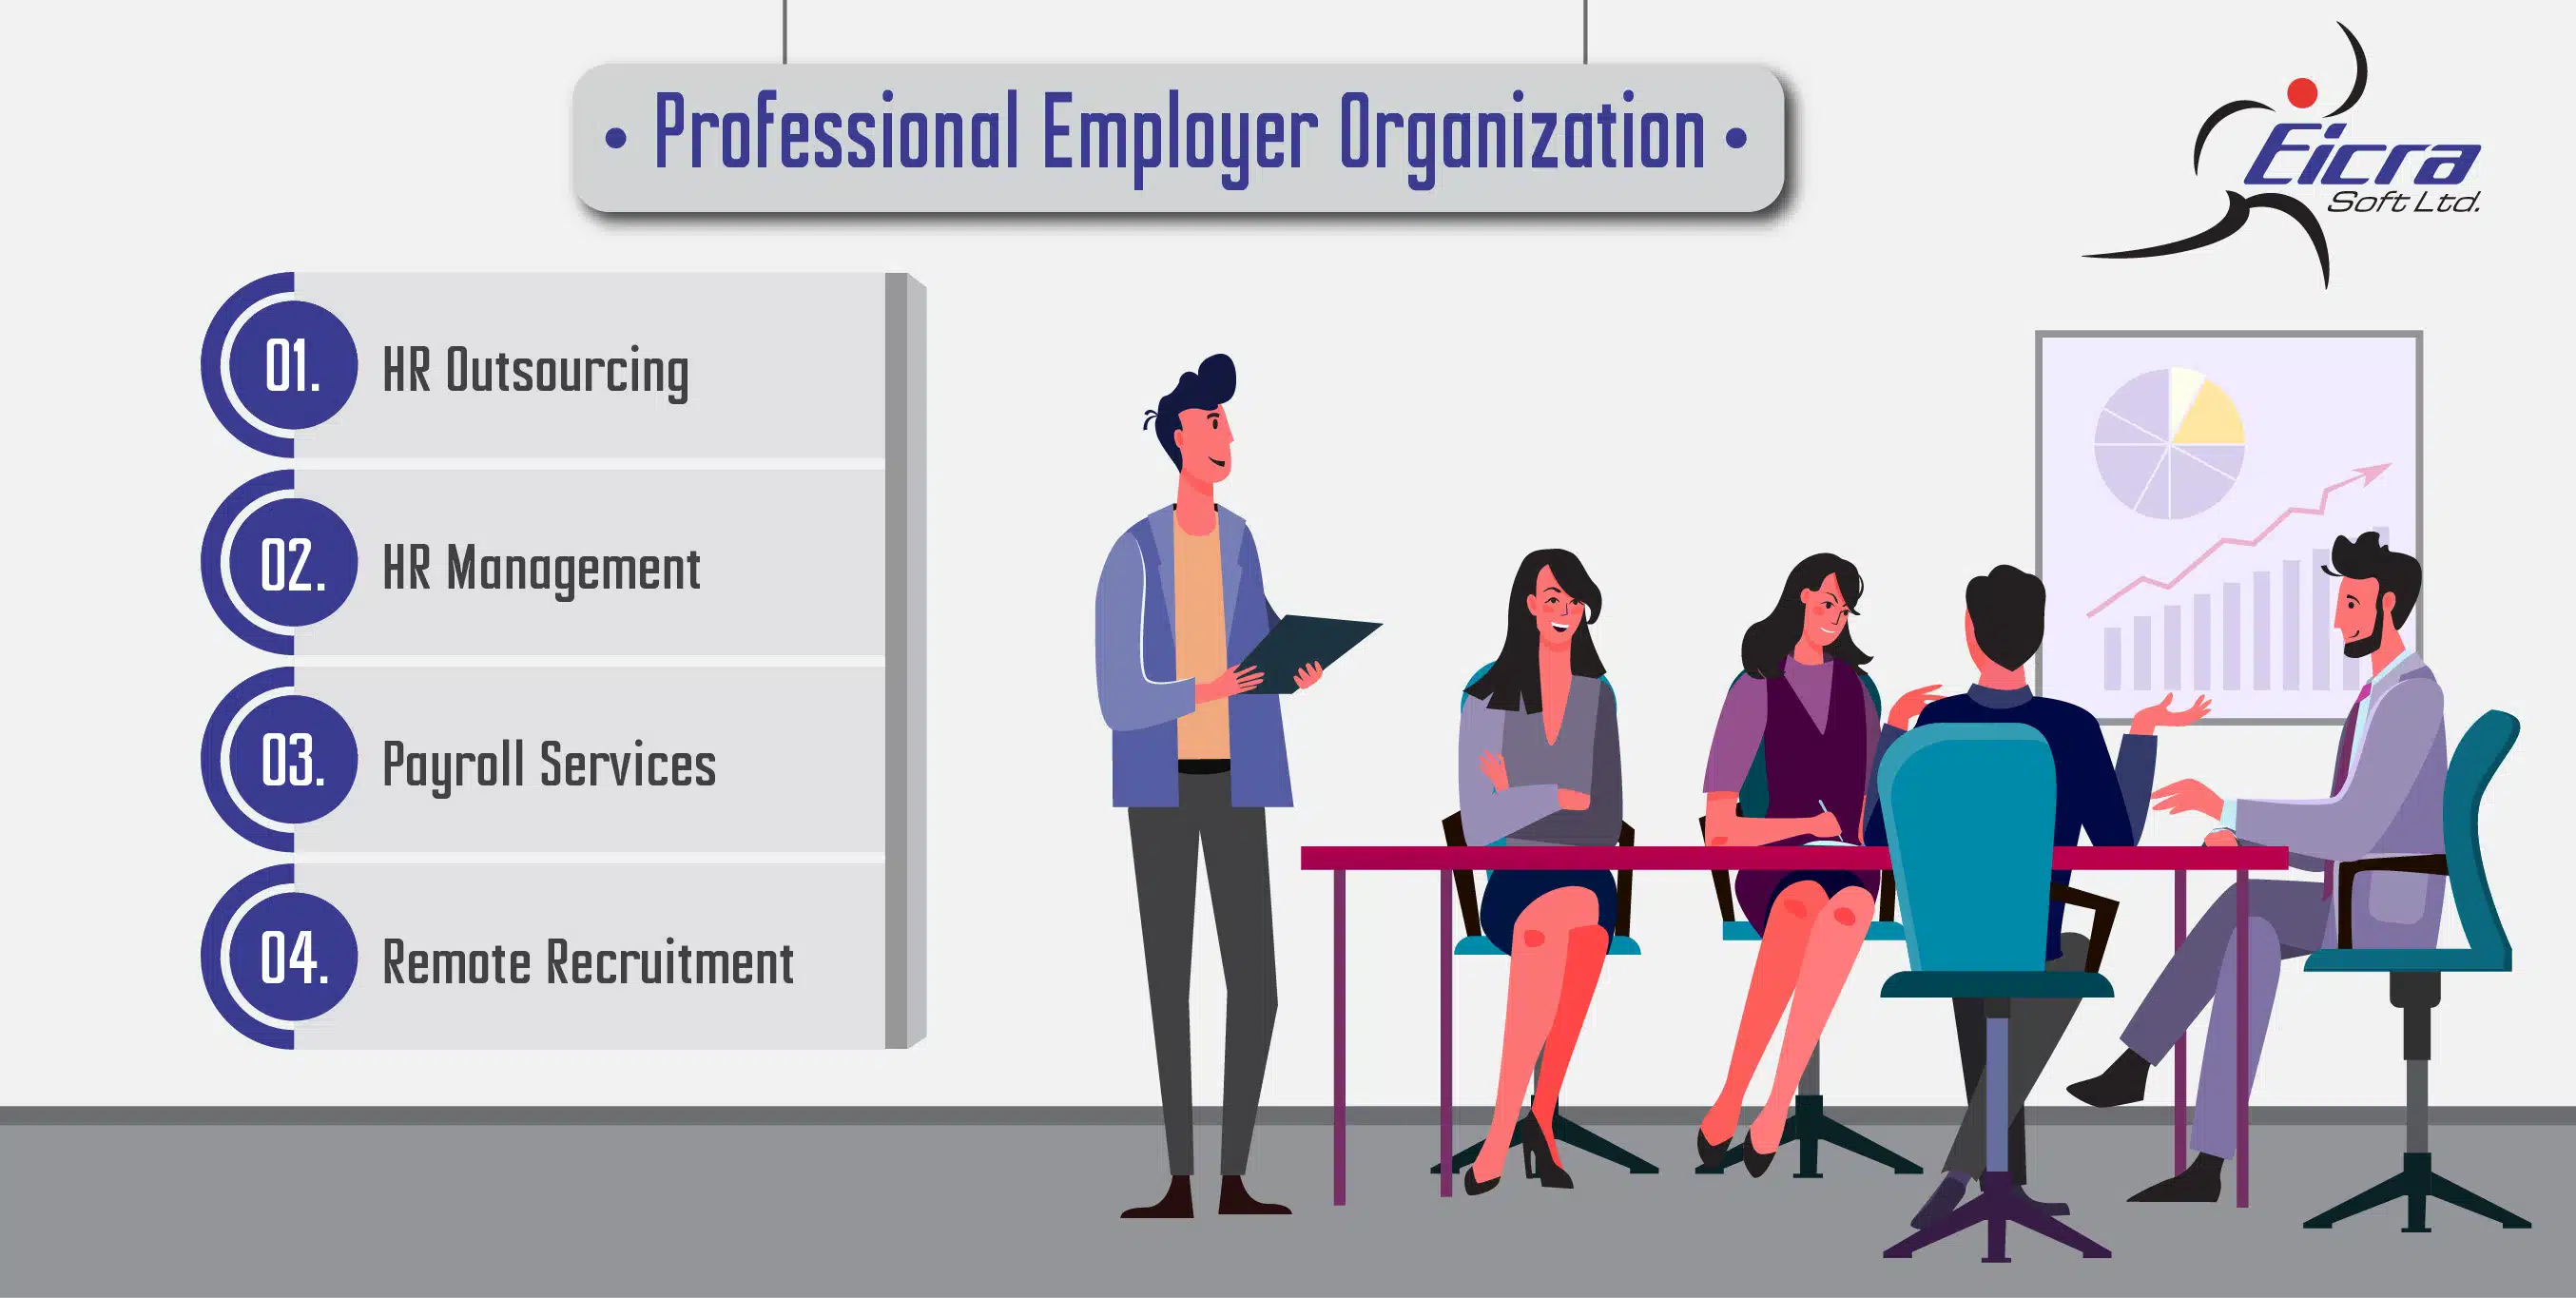 Professional Employer Organization